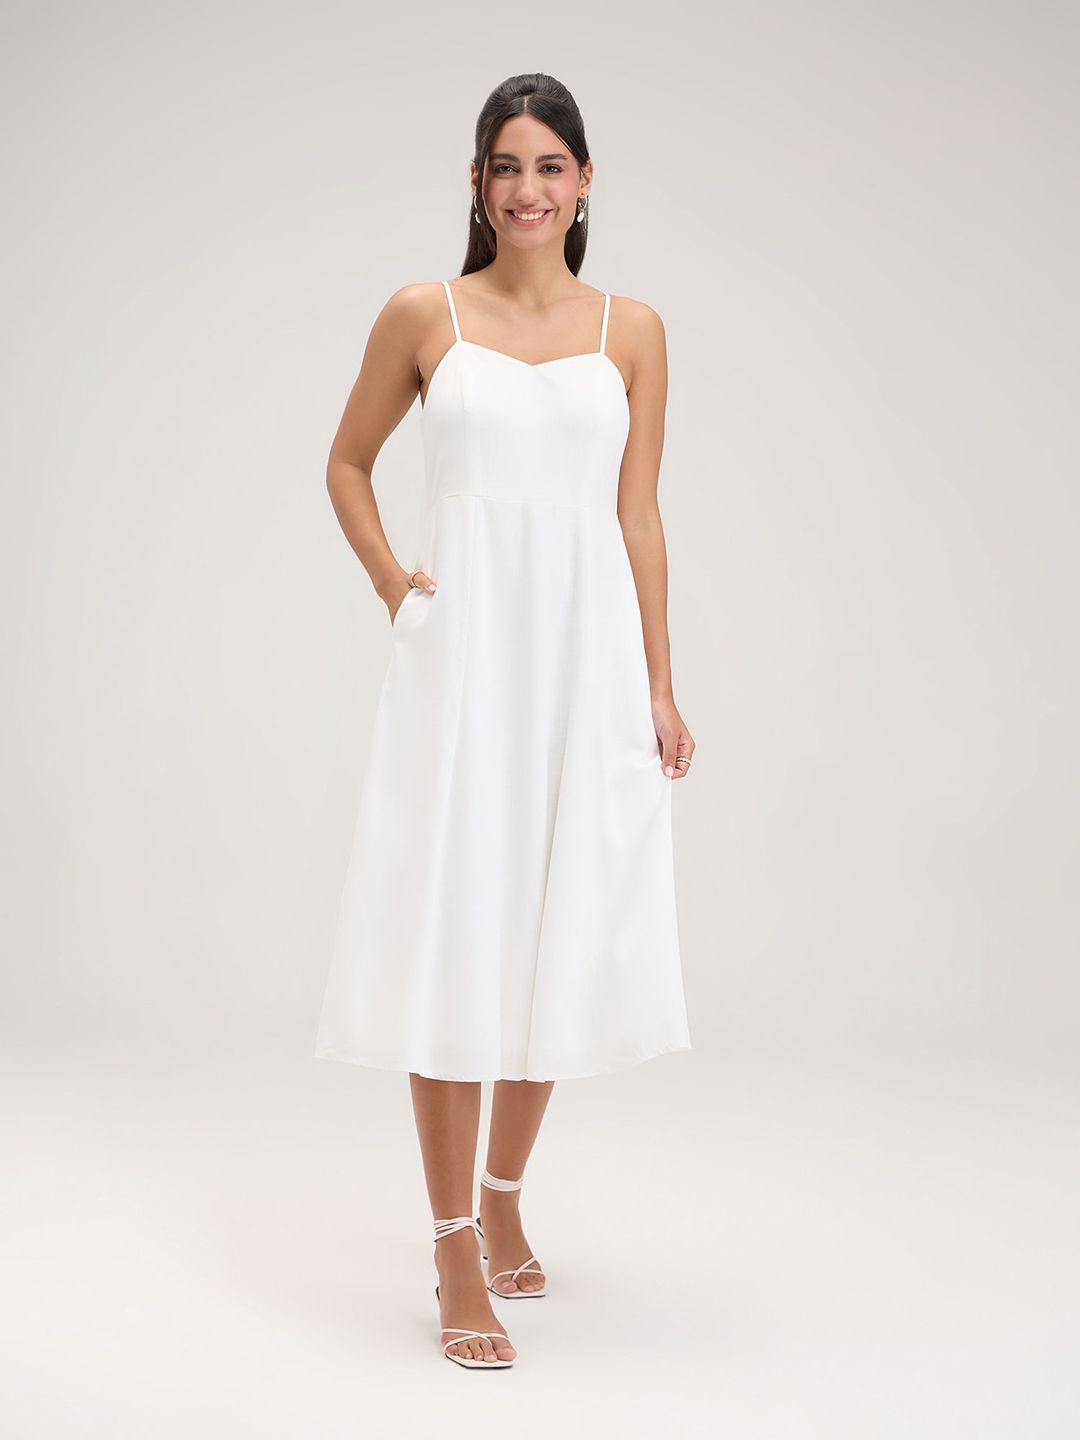 20dresses white shoulder straps smocked fit & flare midi dress